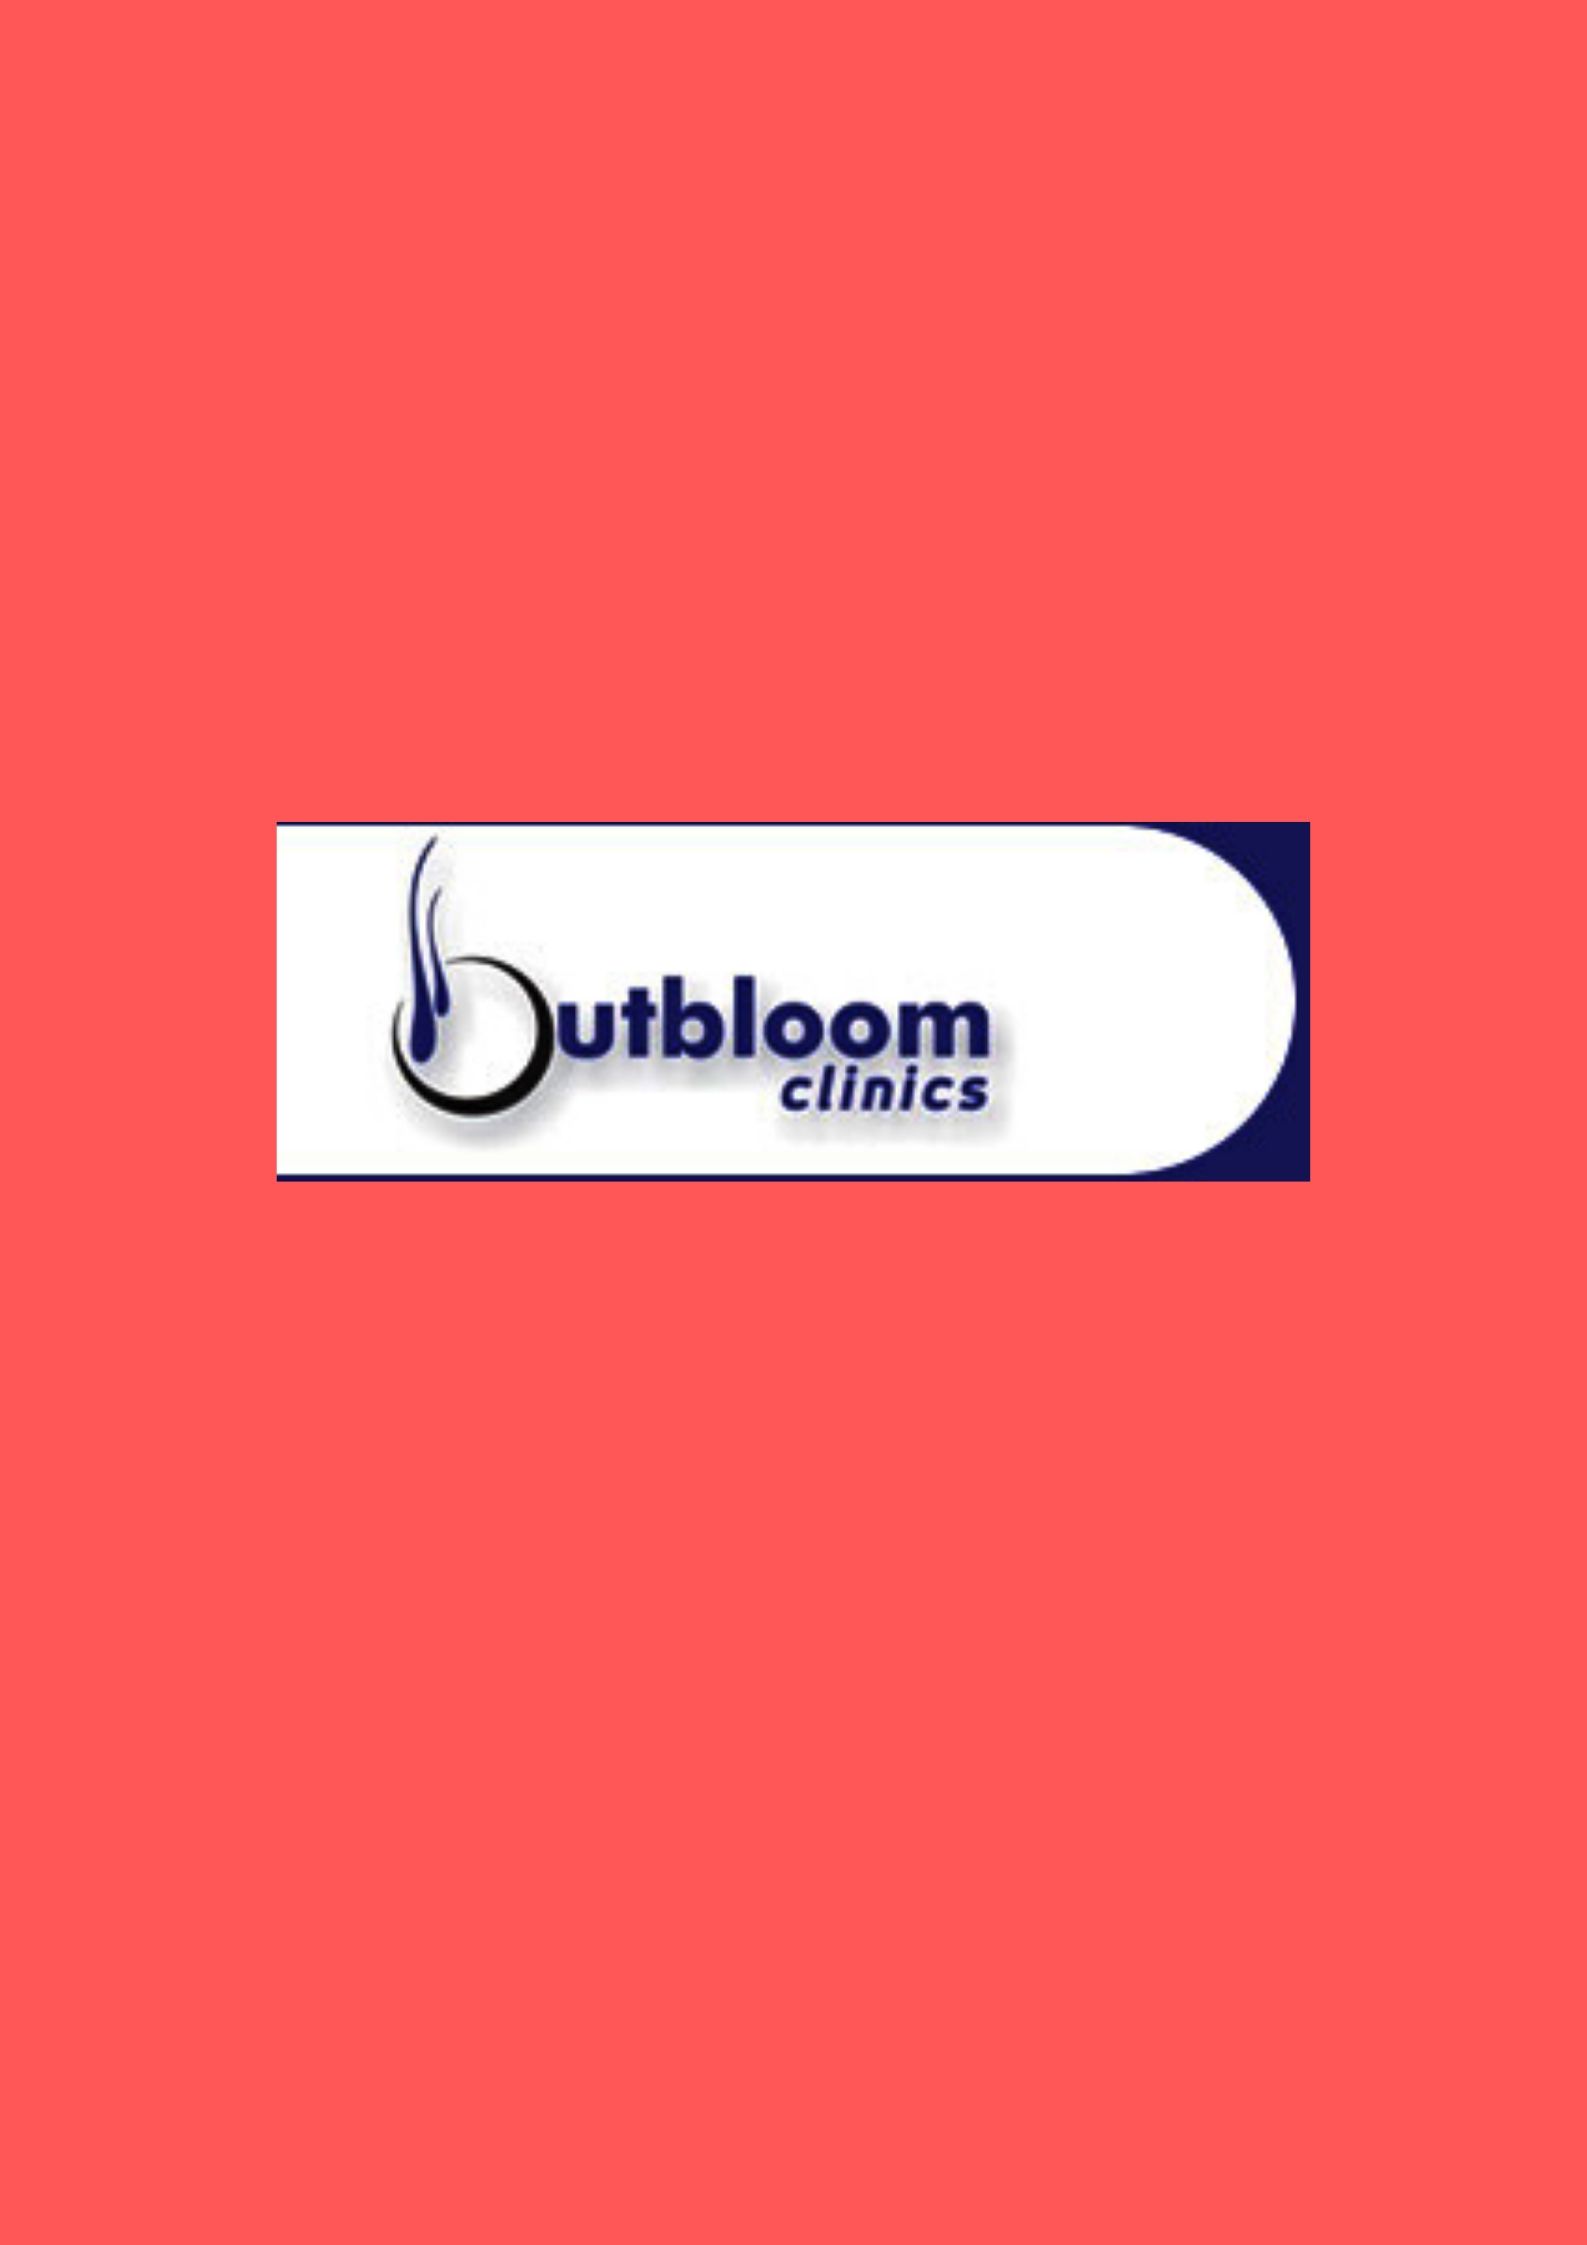 Outbloom clinics 